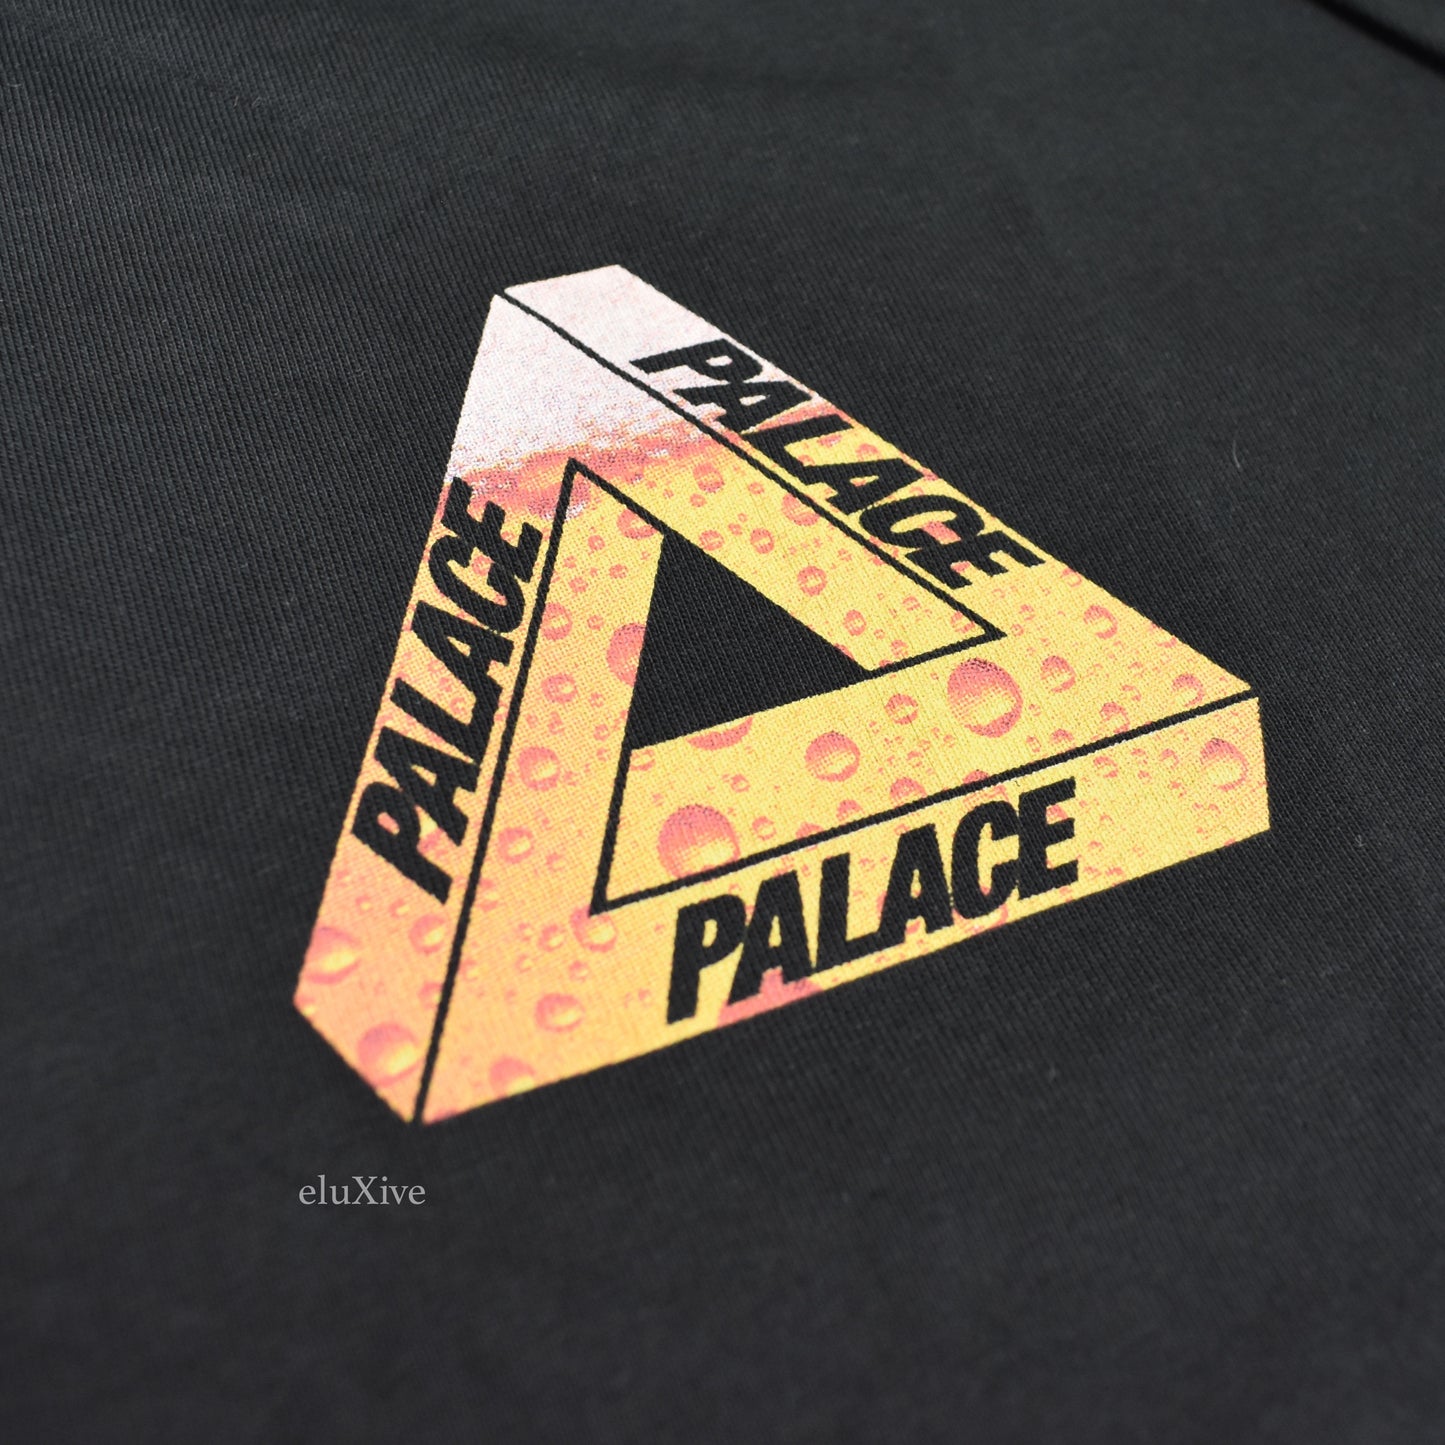 Palace - Lager Tri-Ferg T-Shirt (Black)